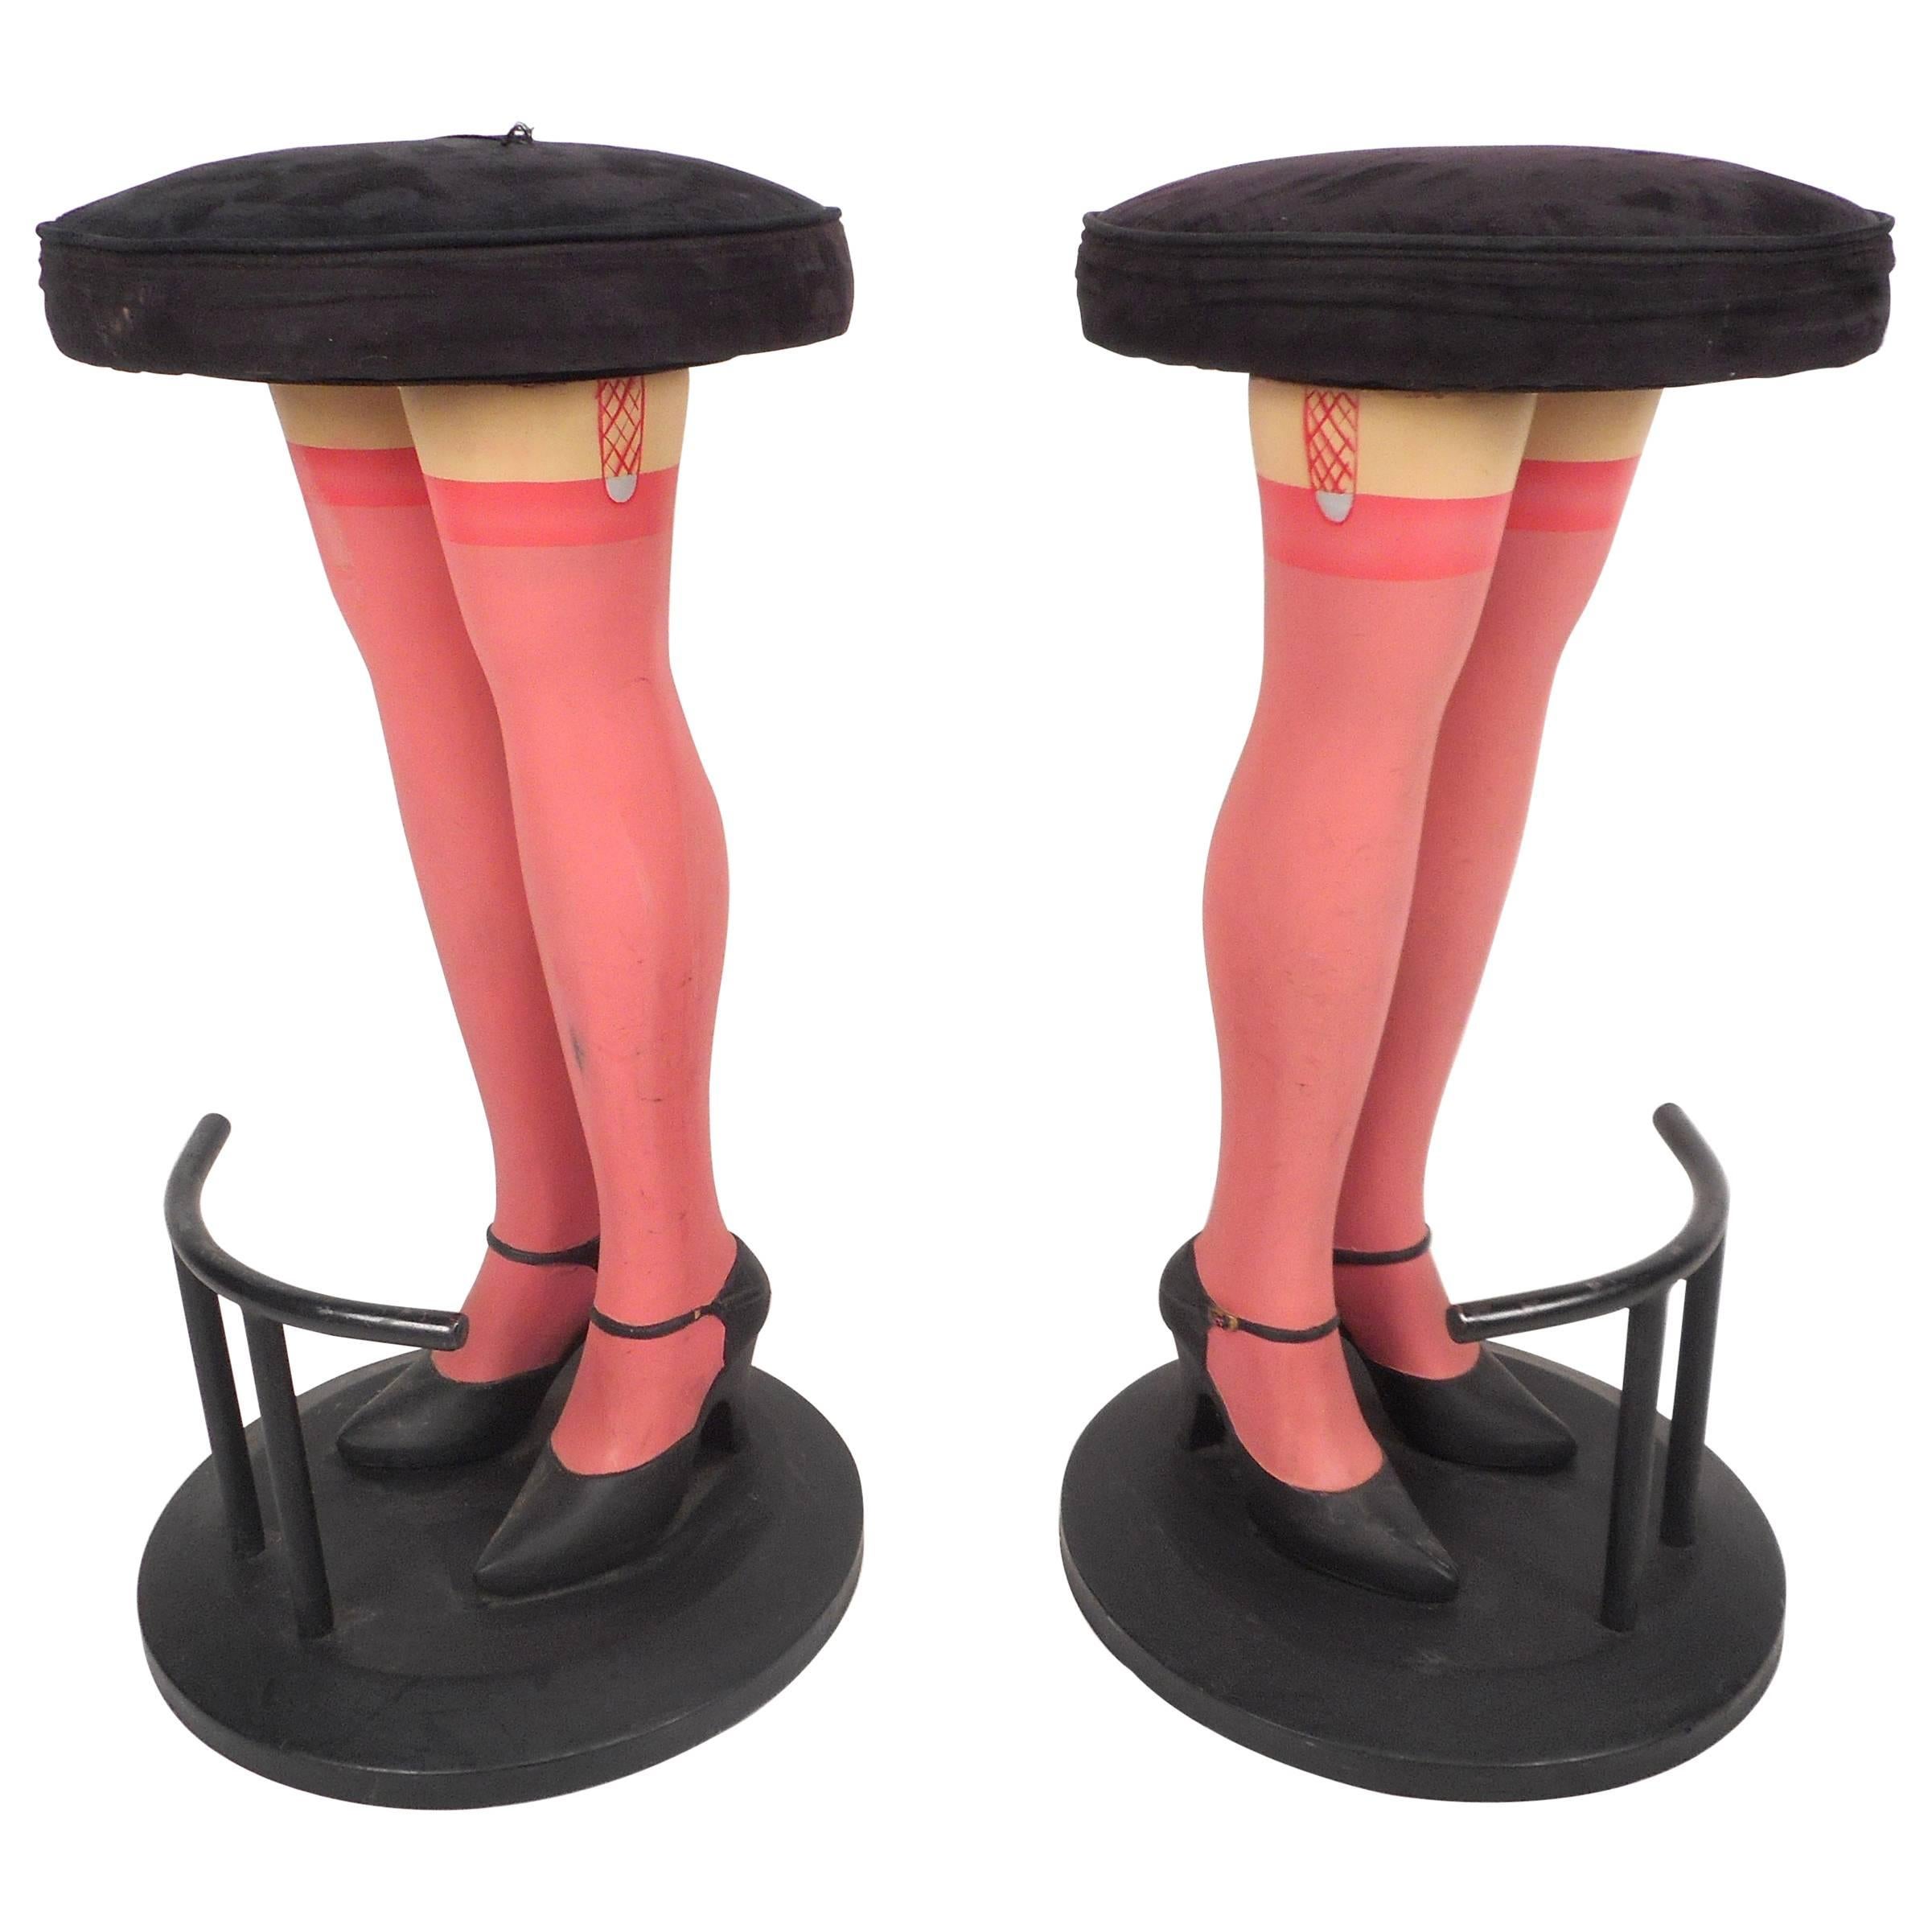 Unique Contemporary Modern "Legs" Bar Stools